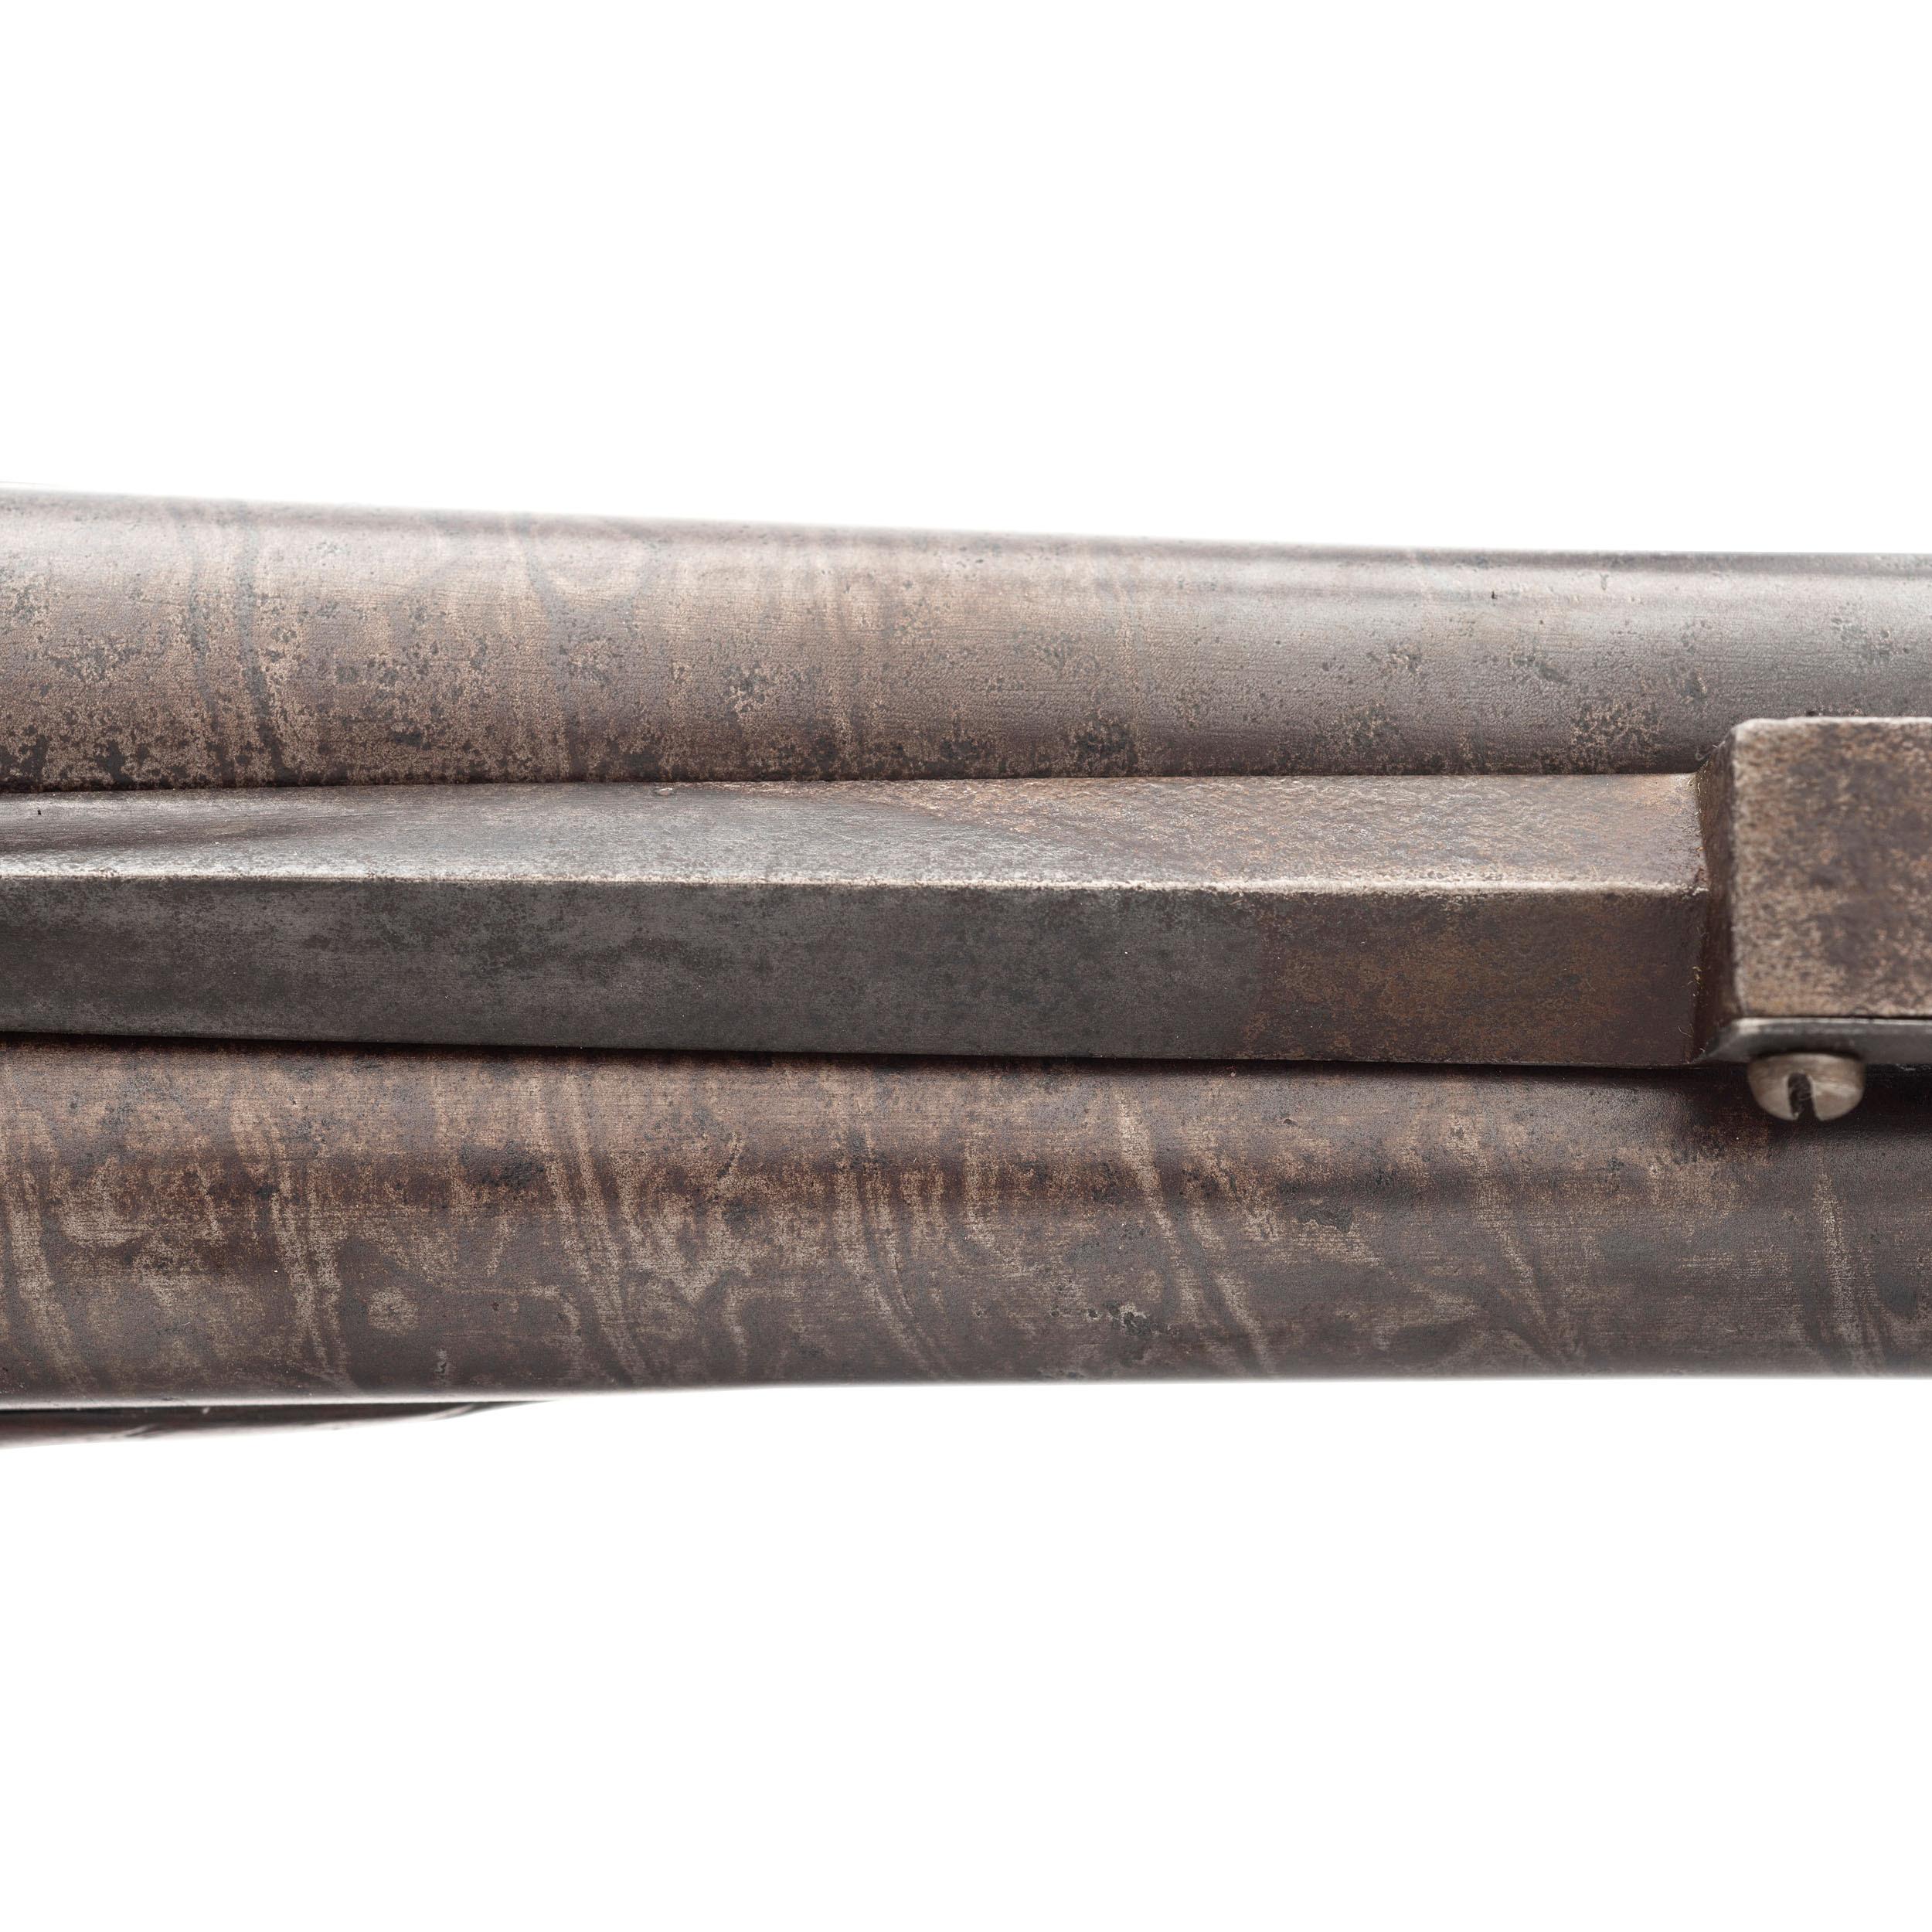 Double Barrel Flintlock Pistol with Snap Bayonet by Williams